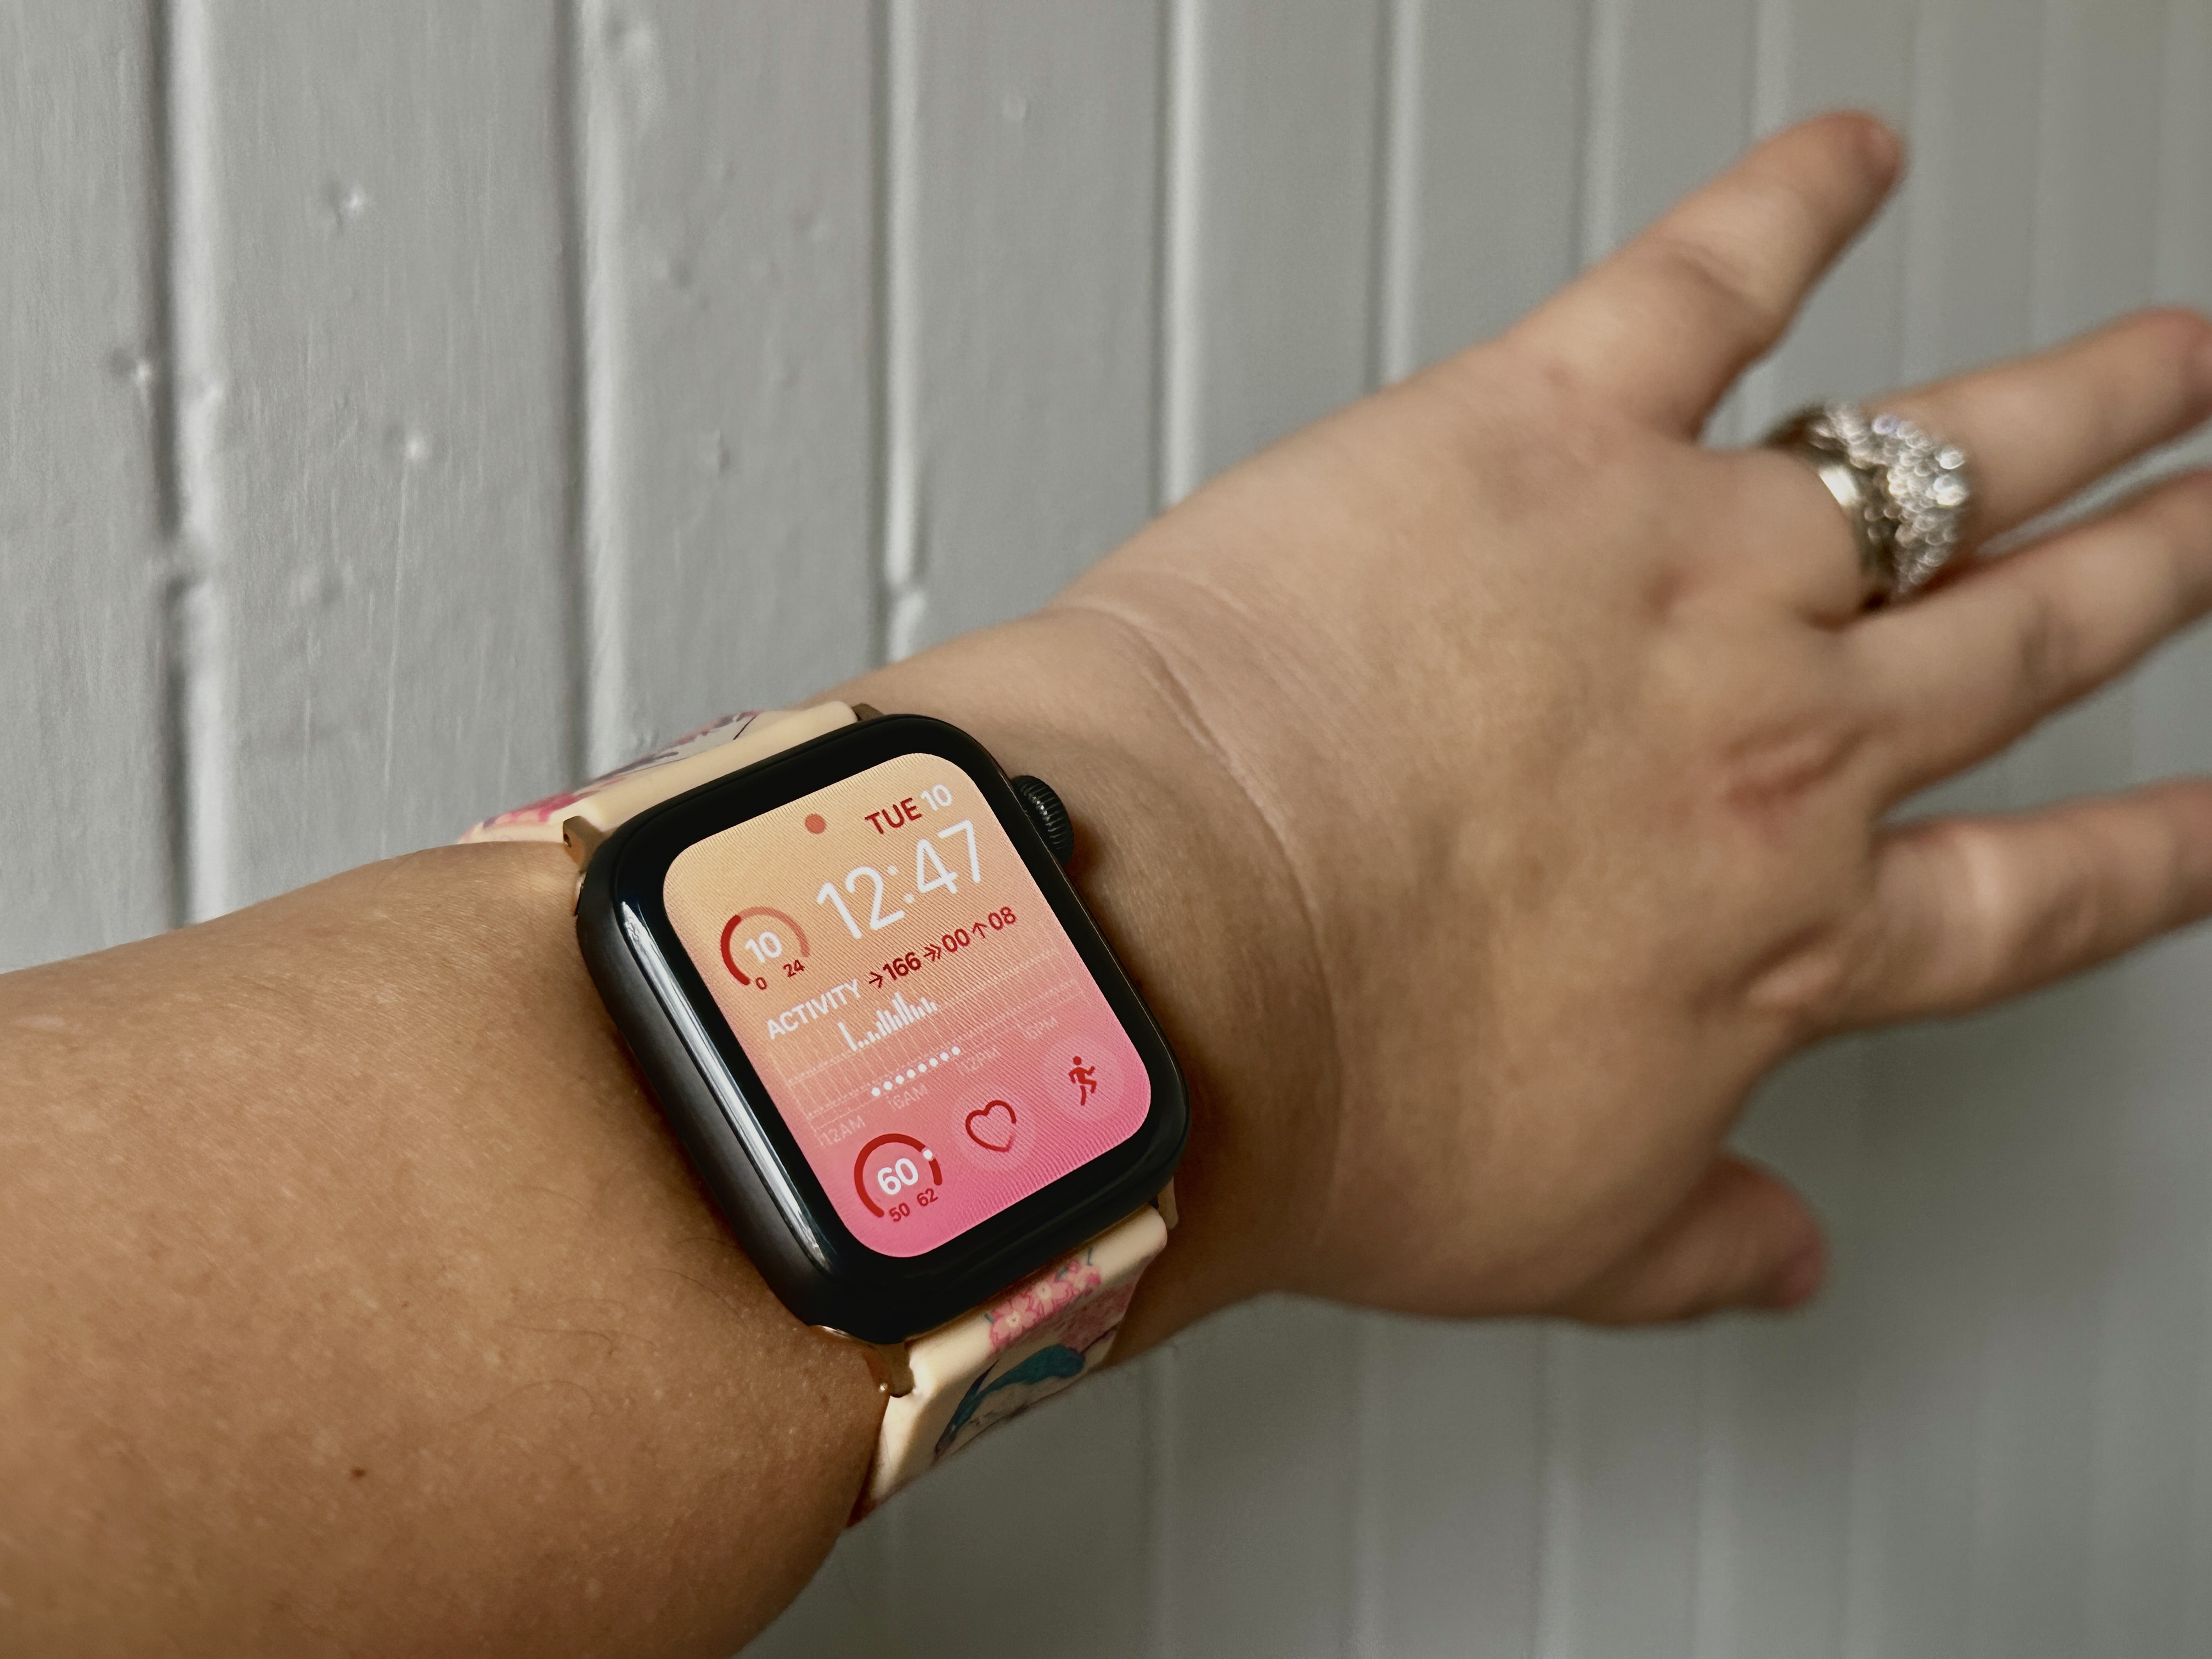 Apple Watch Nike SE 40mm— First Day Impressions! : r/AppleWatch